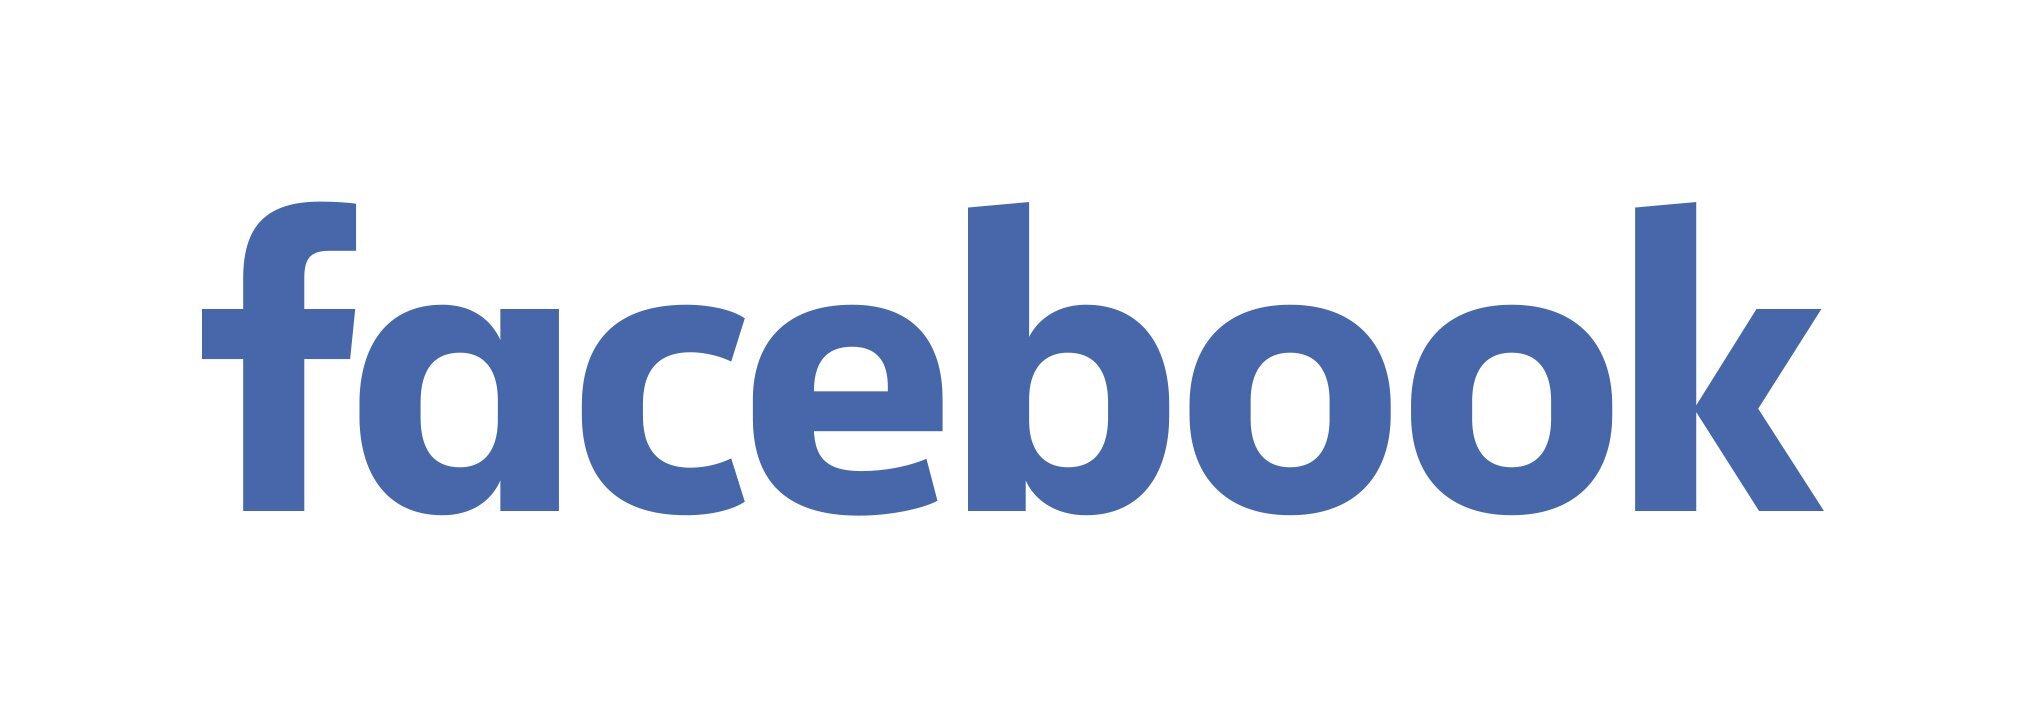 Facebook-Logo-Meaning.jpg